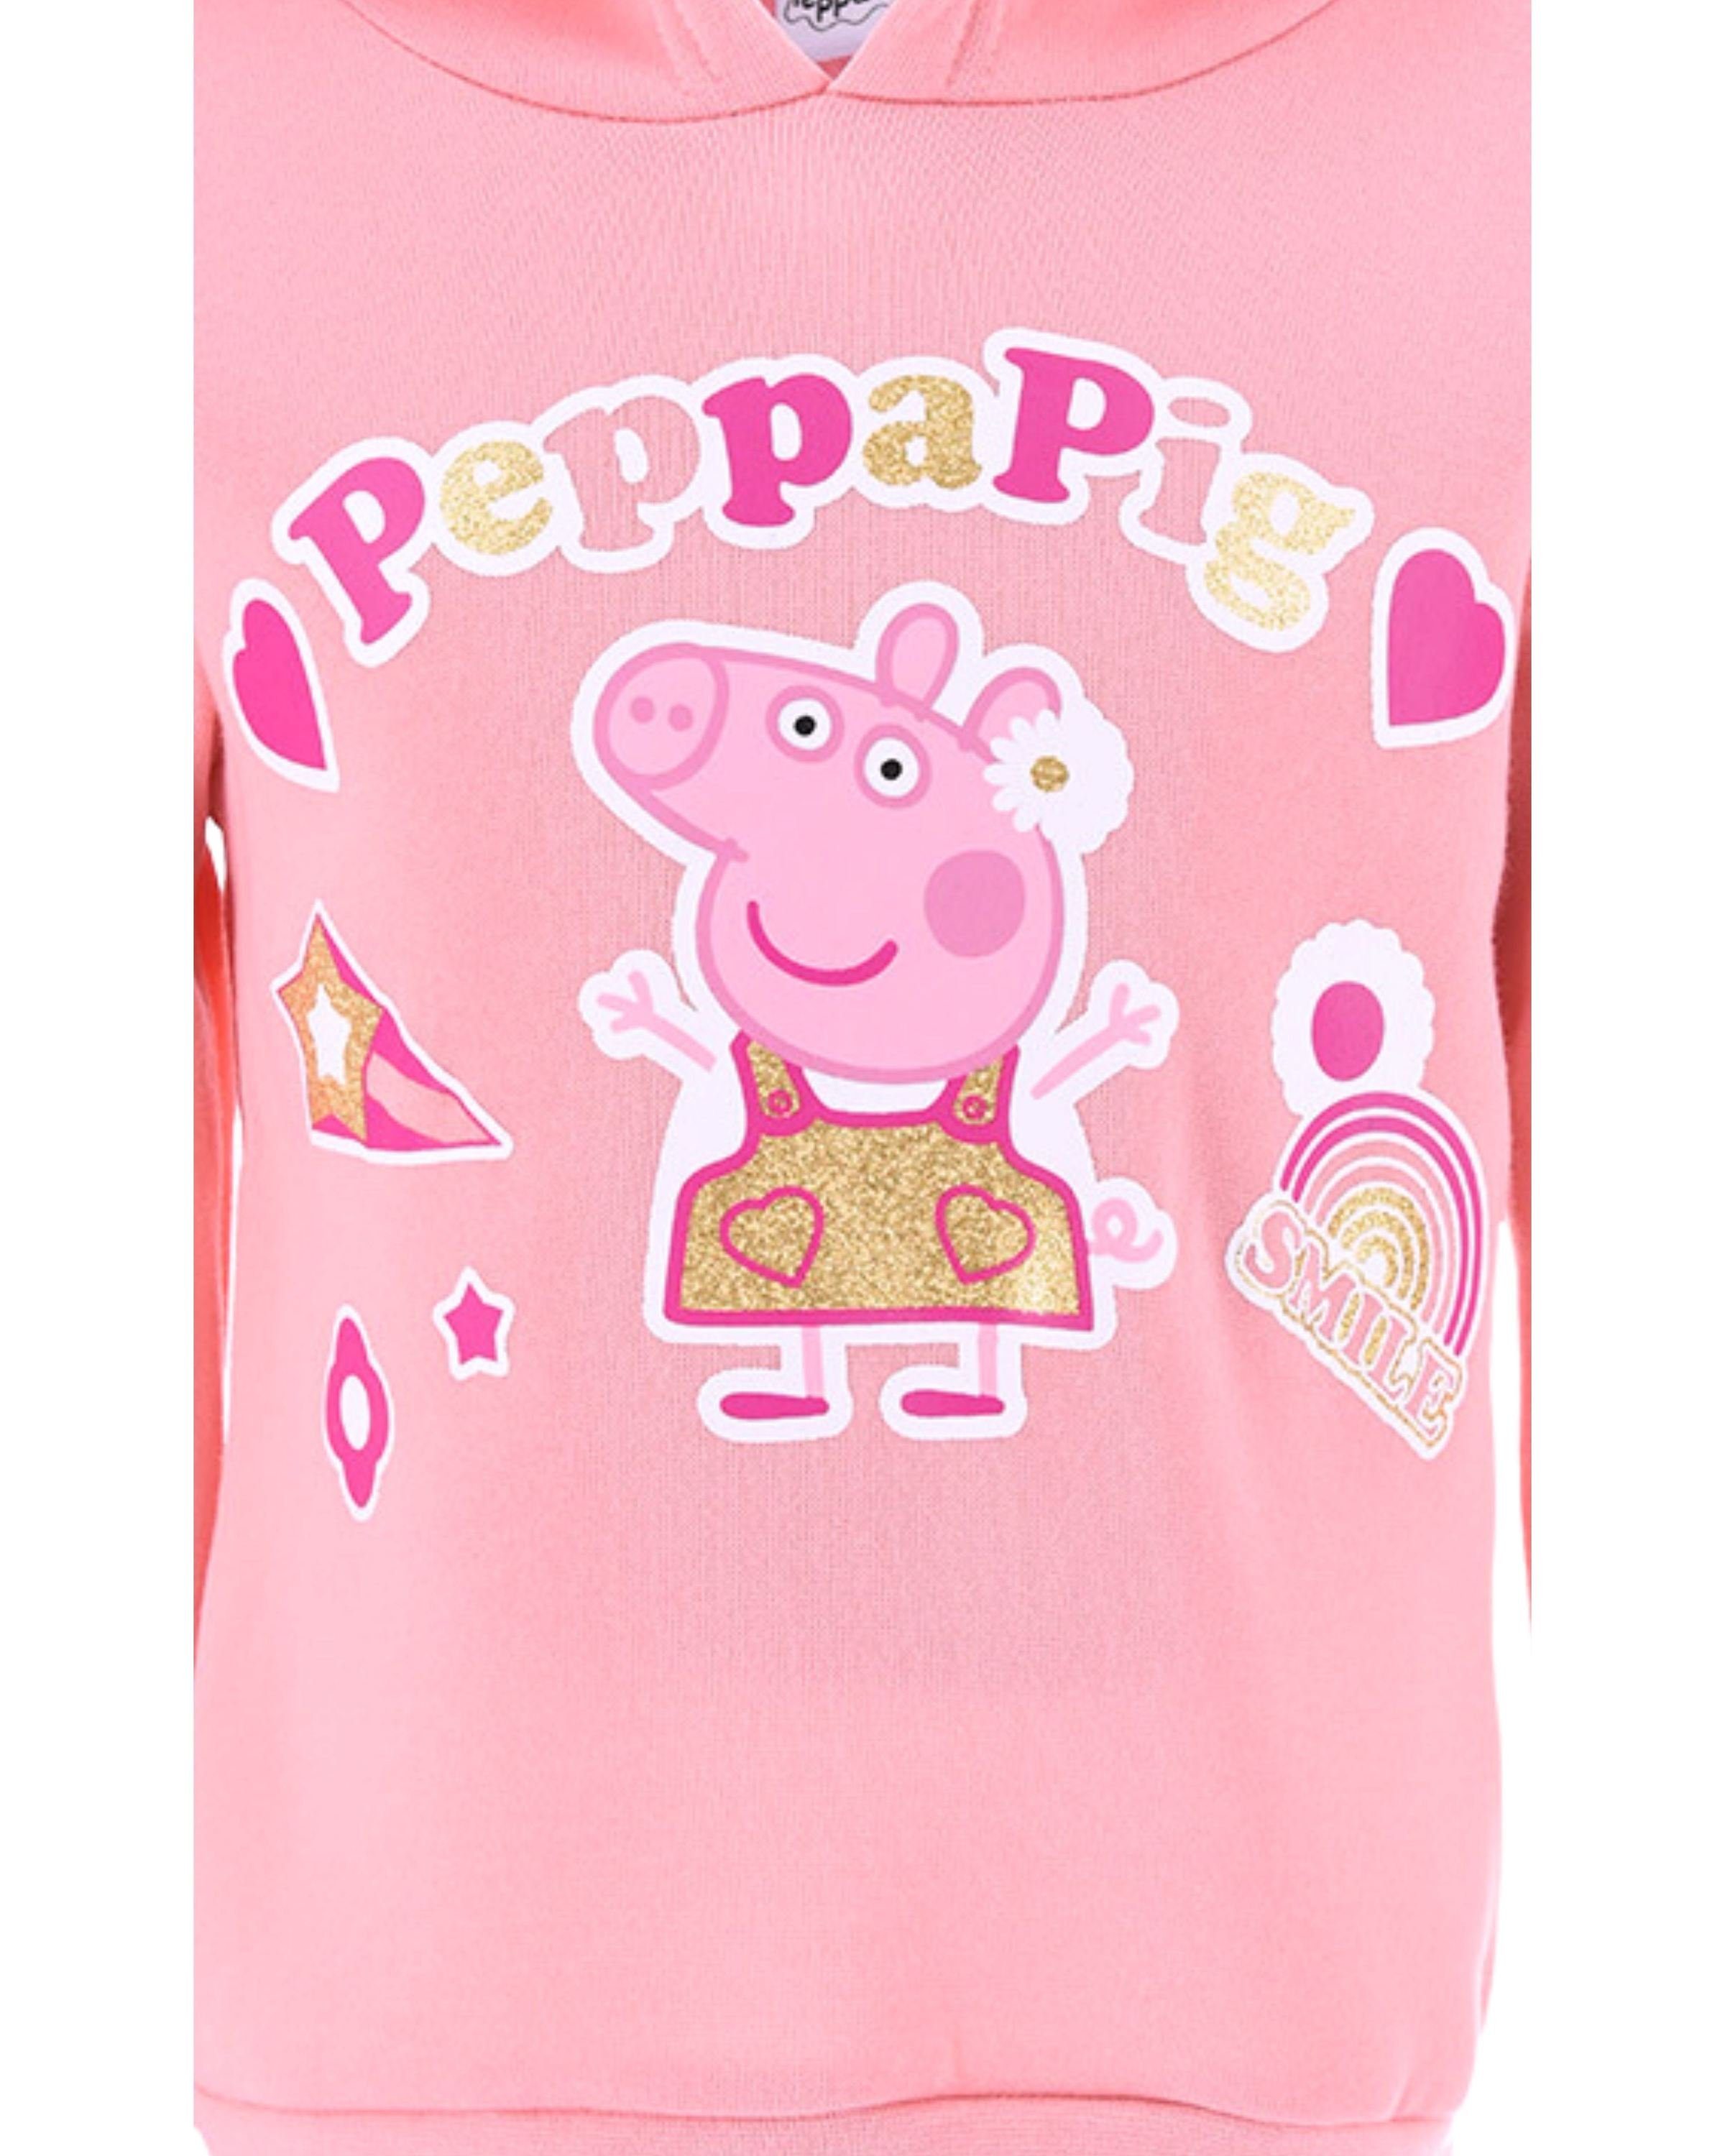 Peppa Pig Hoodie Peppa Rosa Kapuzenpullover cm Mädchen 98 - 116 Wutz Gr